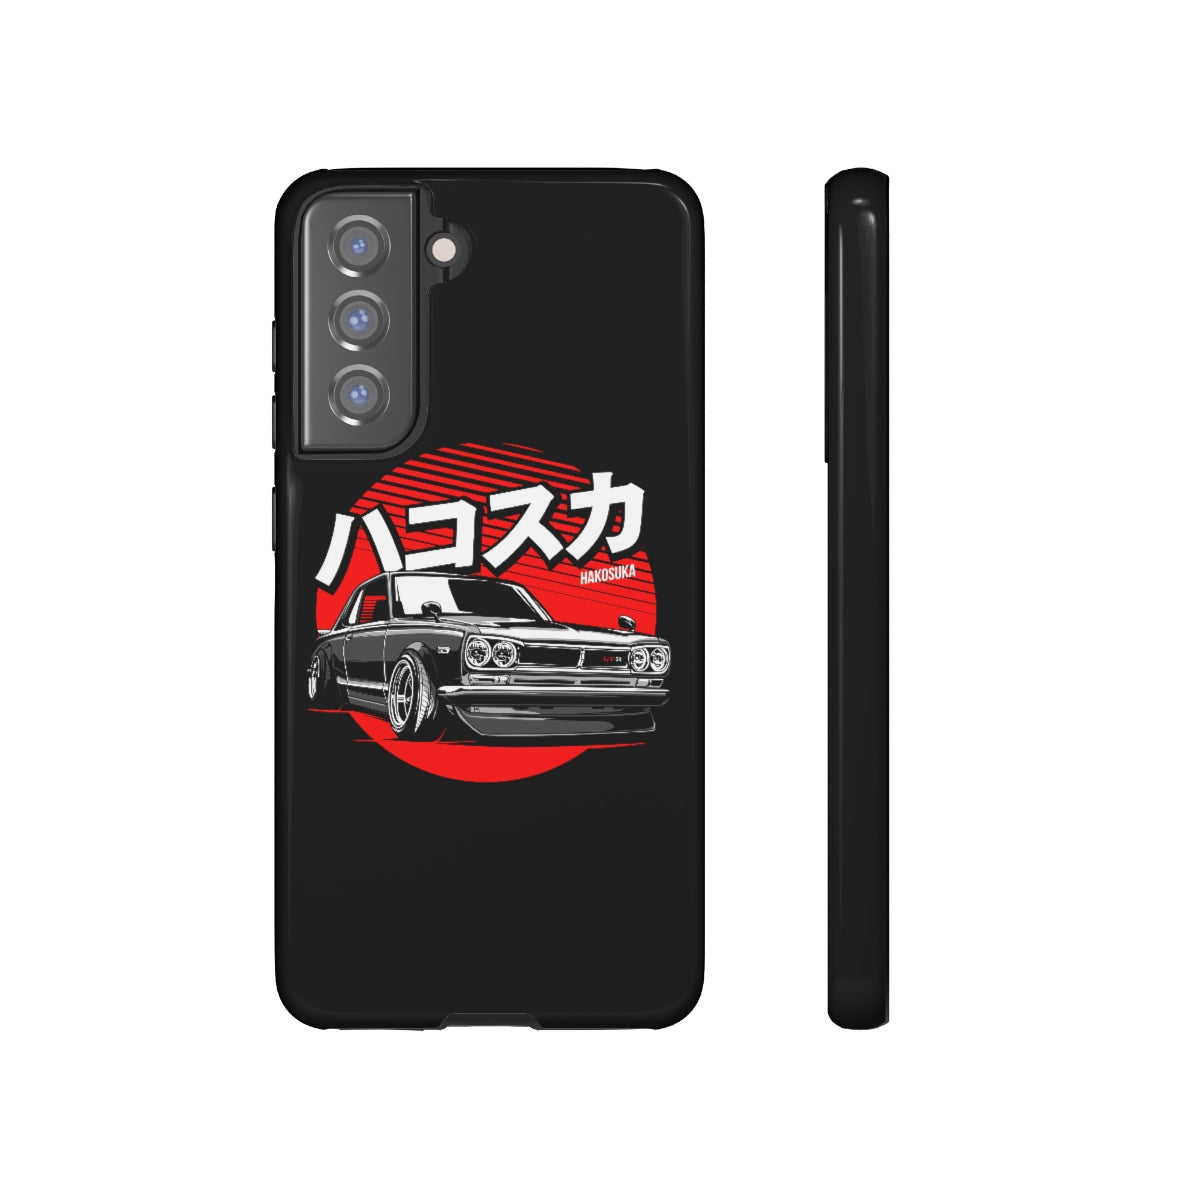 Skyline GTR Hakosuka - Car Phone Case - Samsung Galaxy S21 FE